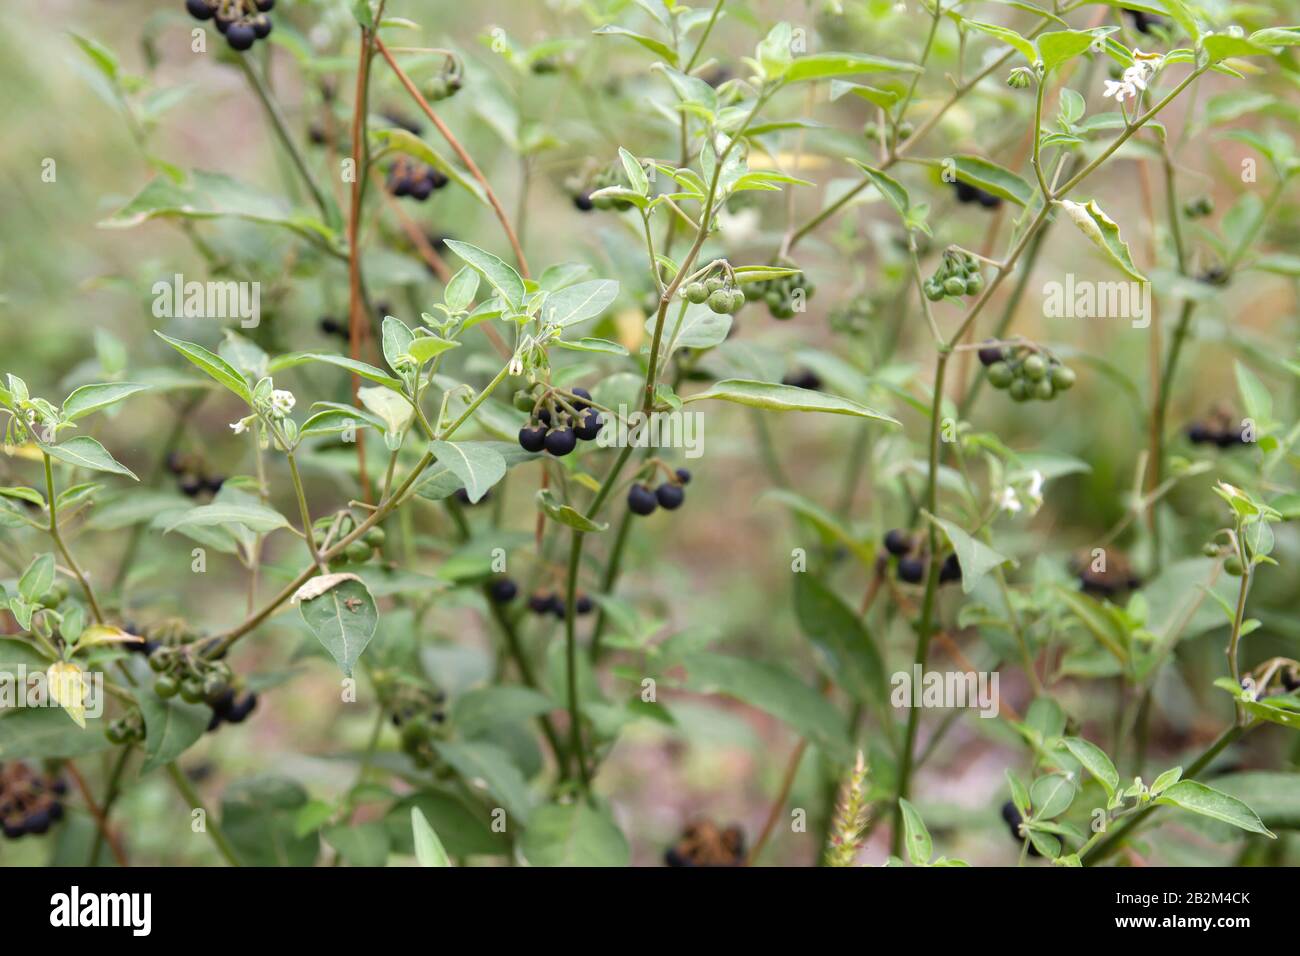 American black nightshade plant berries Stock Photo